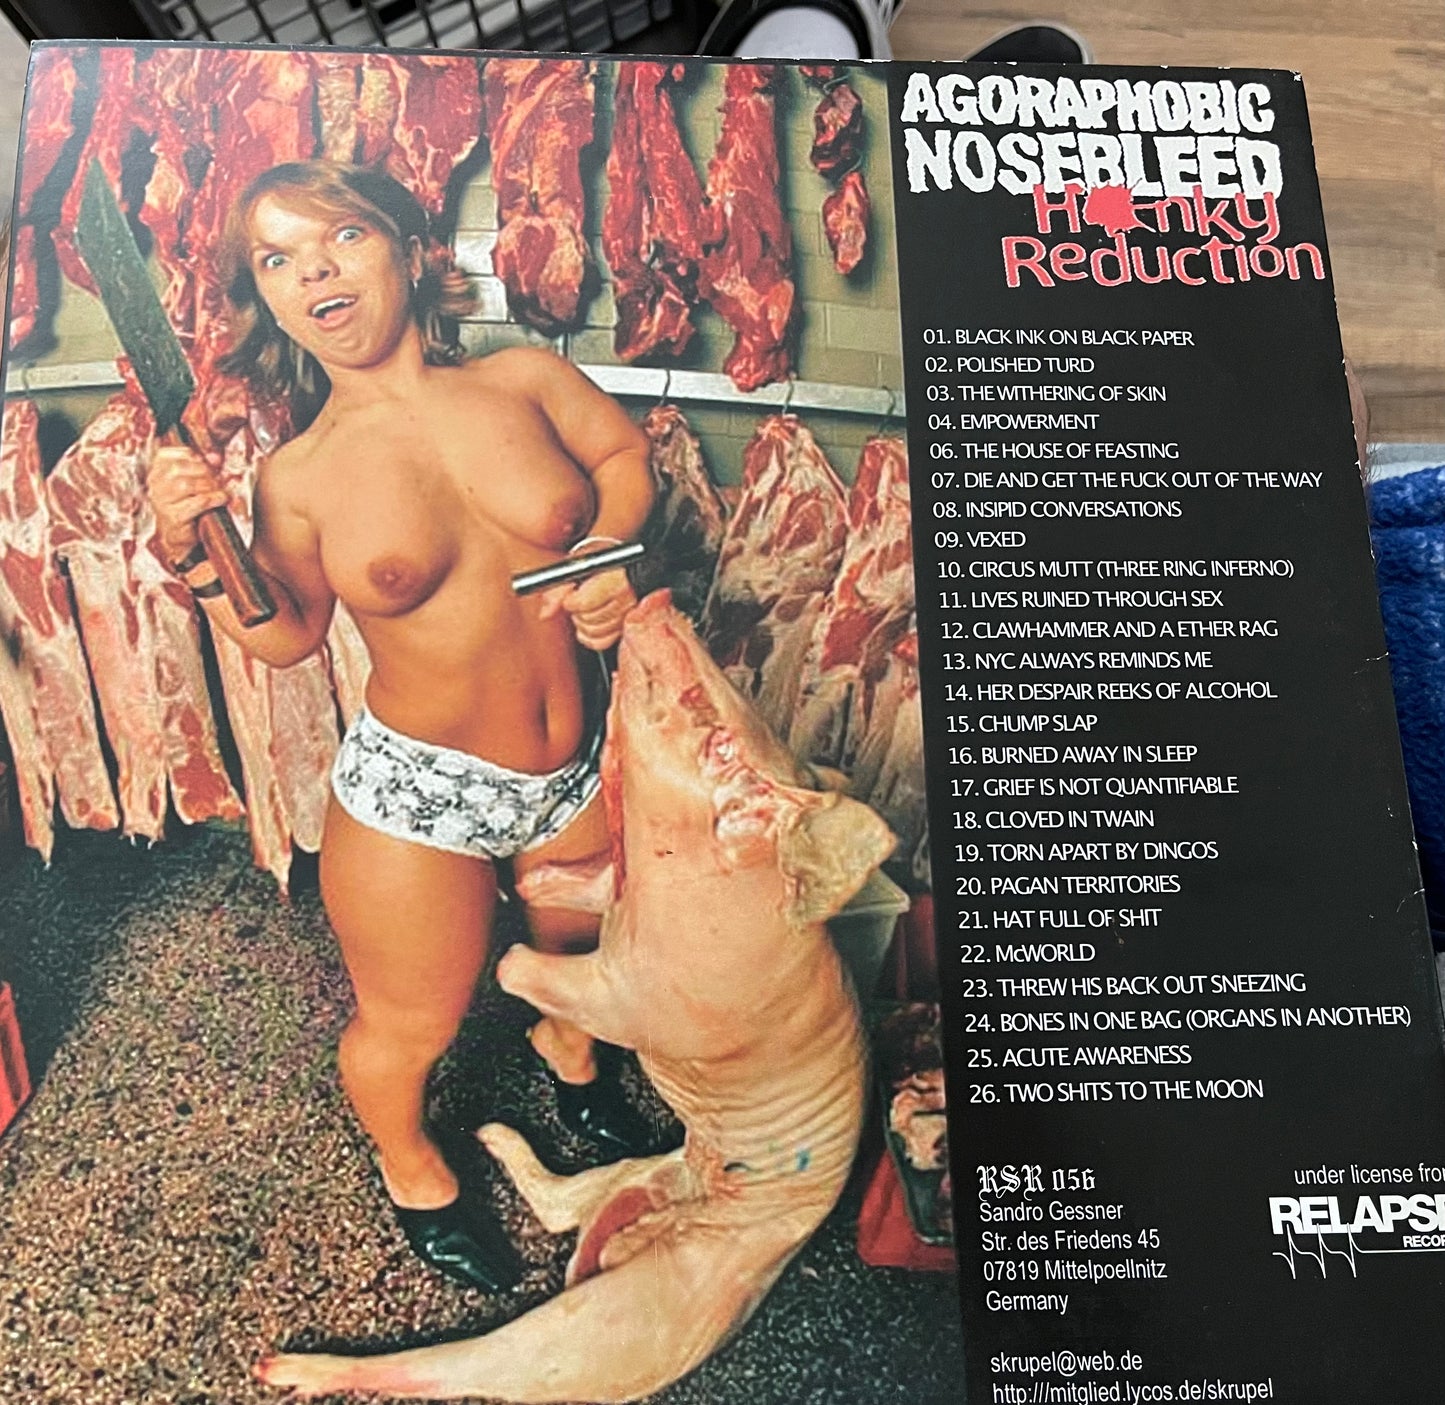 Agoraphobic Nosebleed - Honky Reduction (2006 German Pressing)